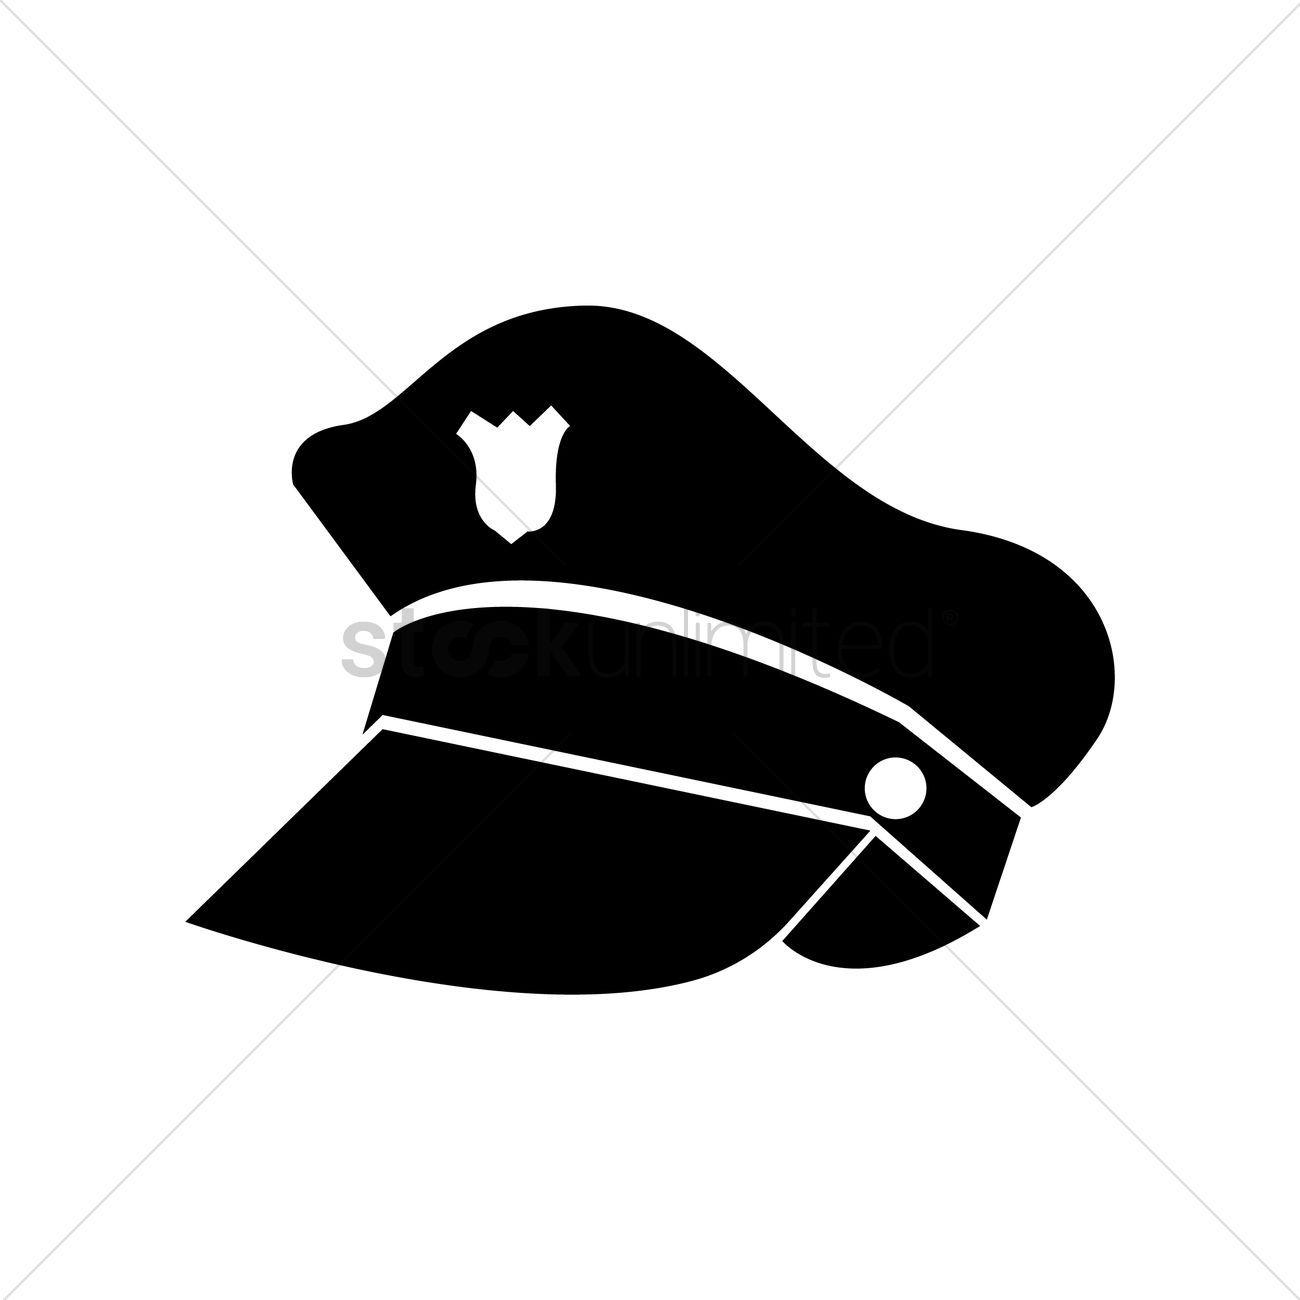 Police Cap Logo - Police cap Vector Image - 1503606 | StockUnlimited